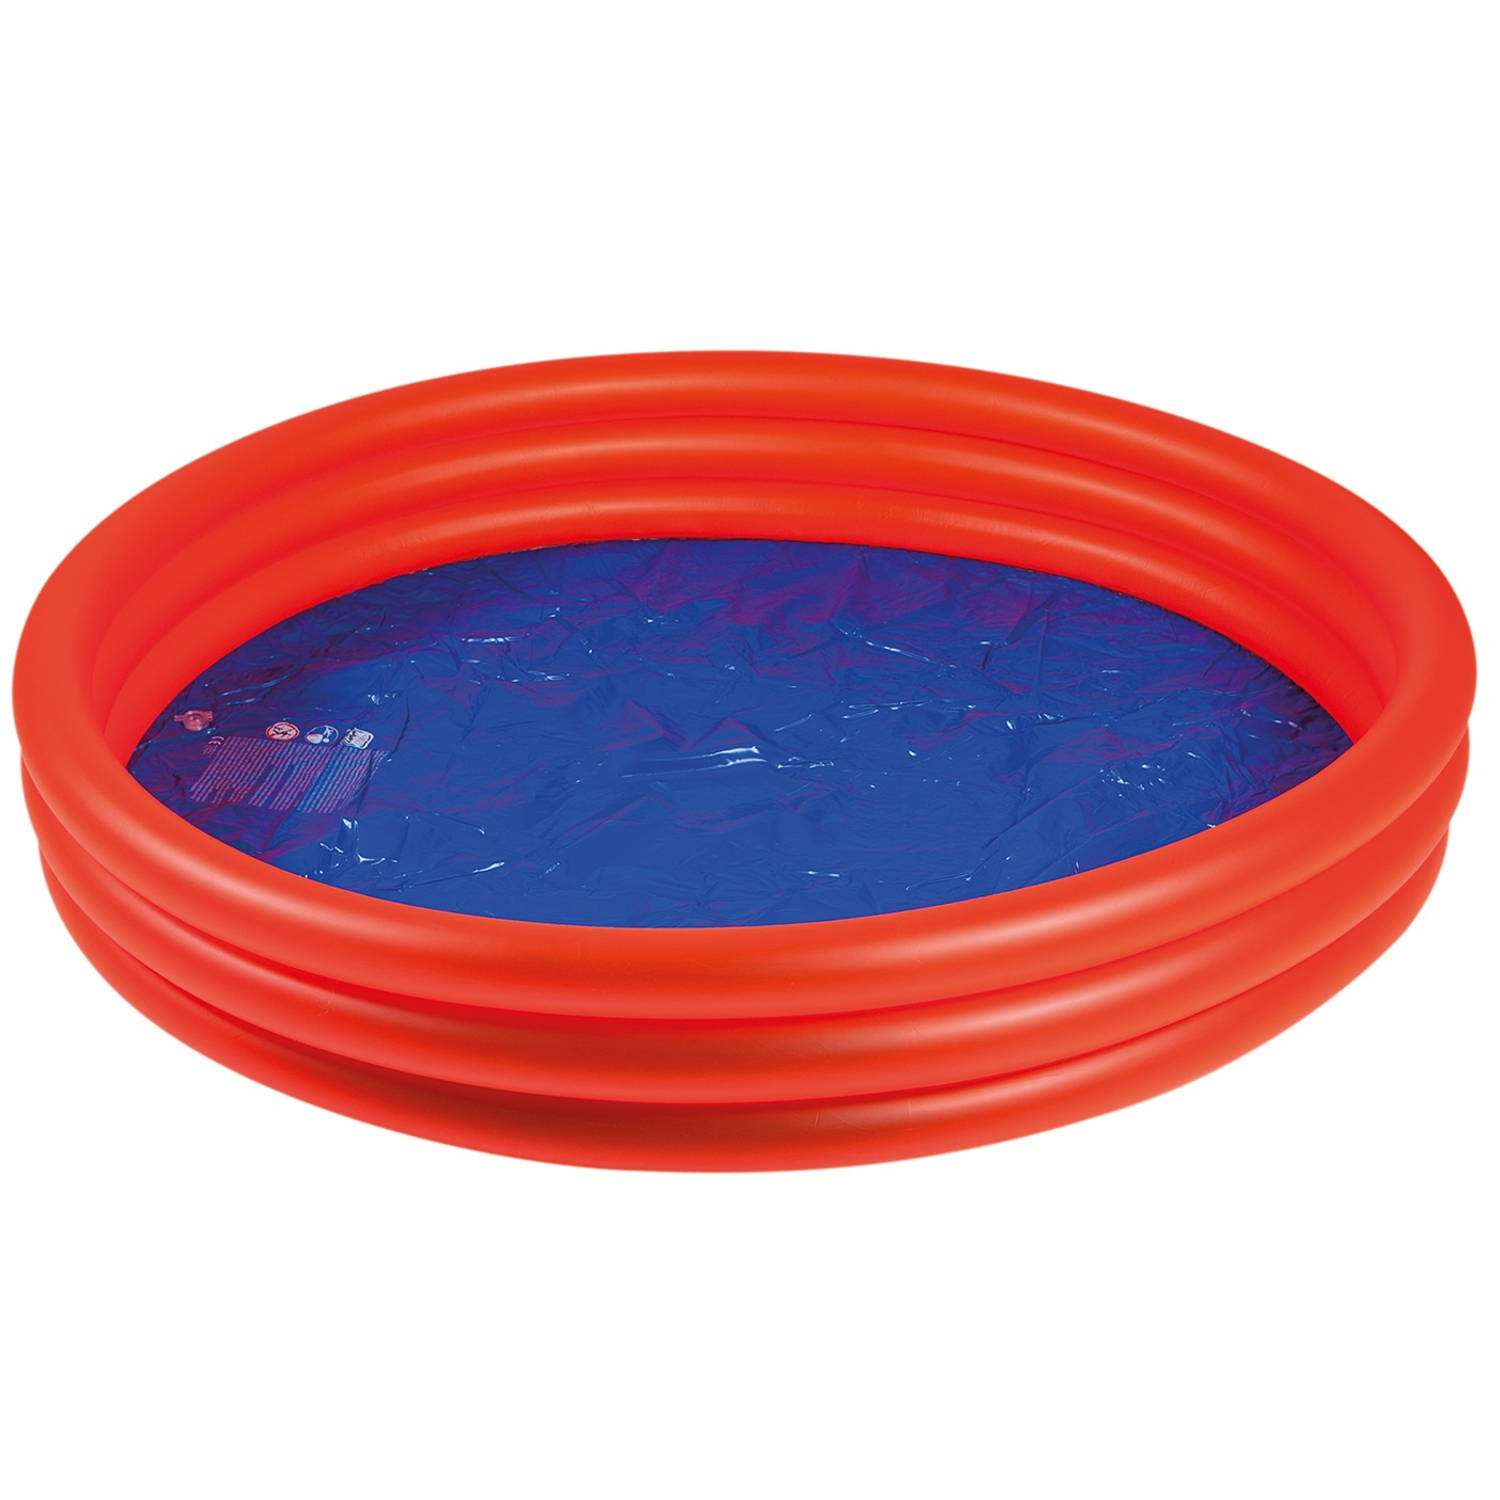 Wehncke opblaaszwembad junior 175 x 175 cm PVC rood-blauw